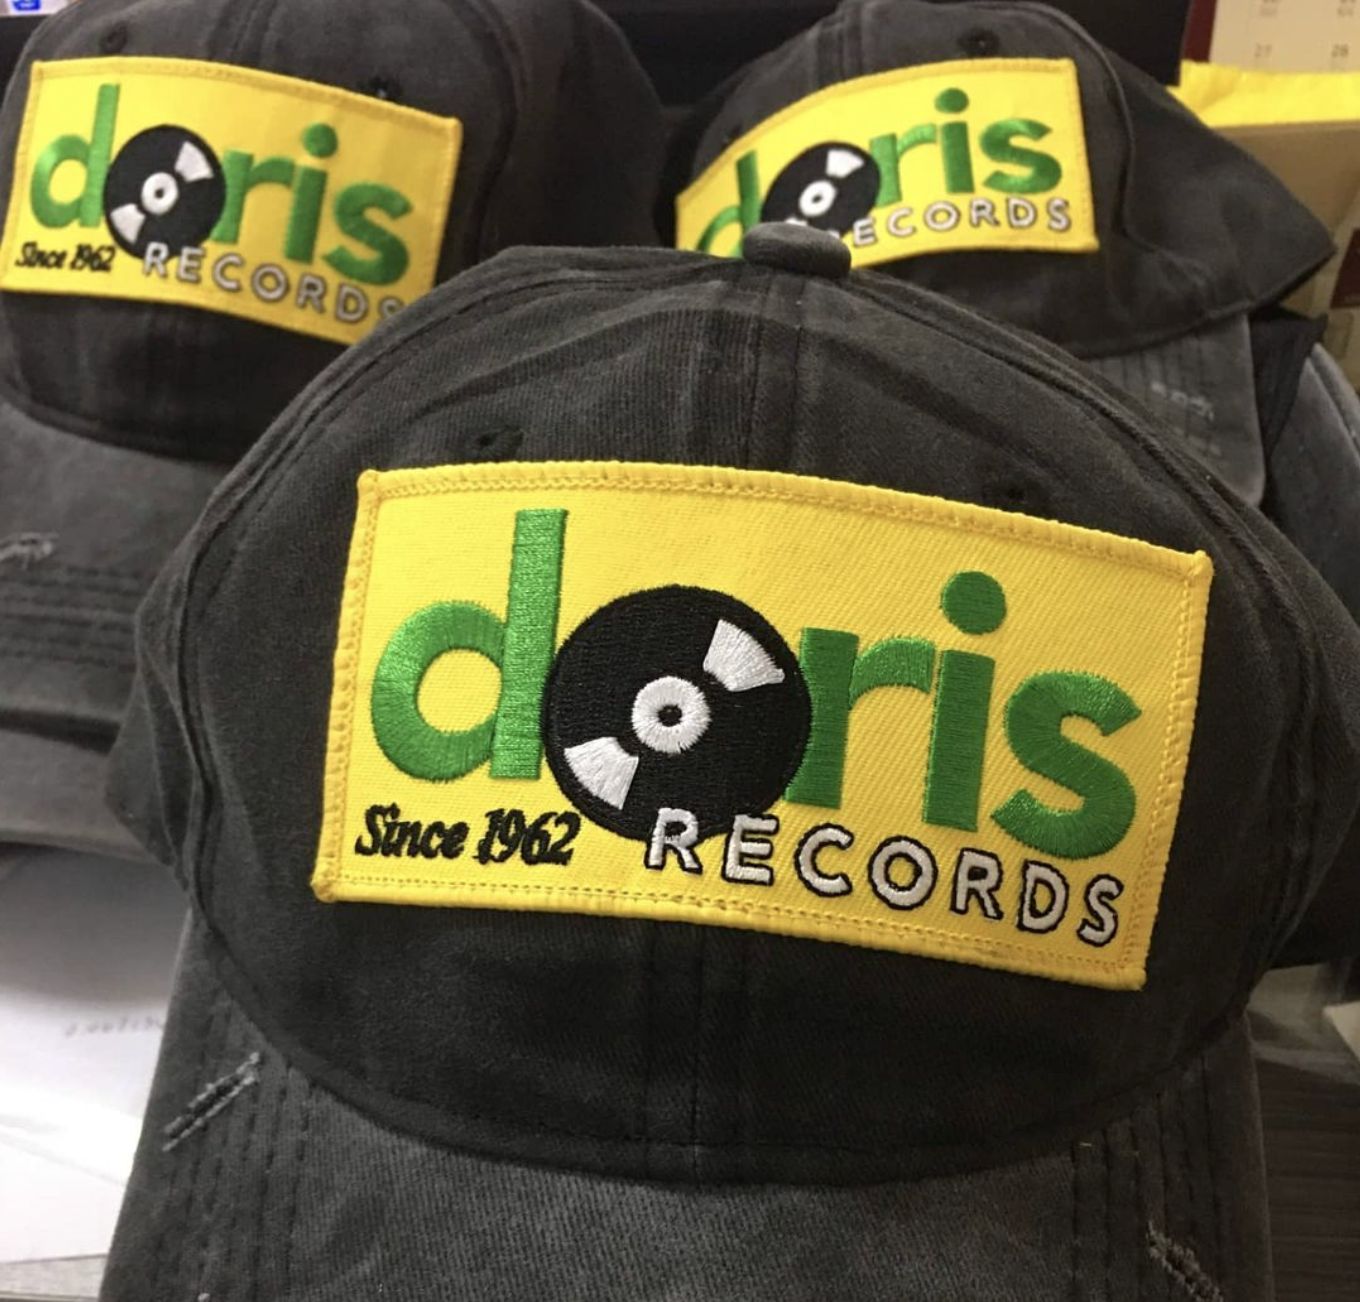 Doris Records